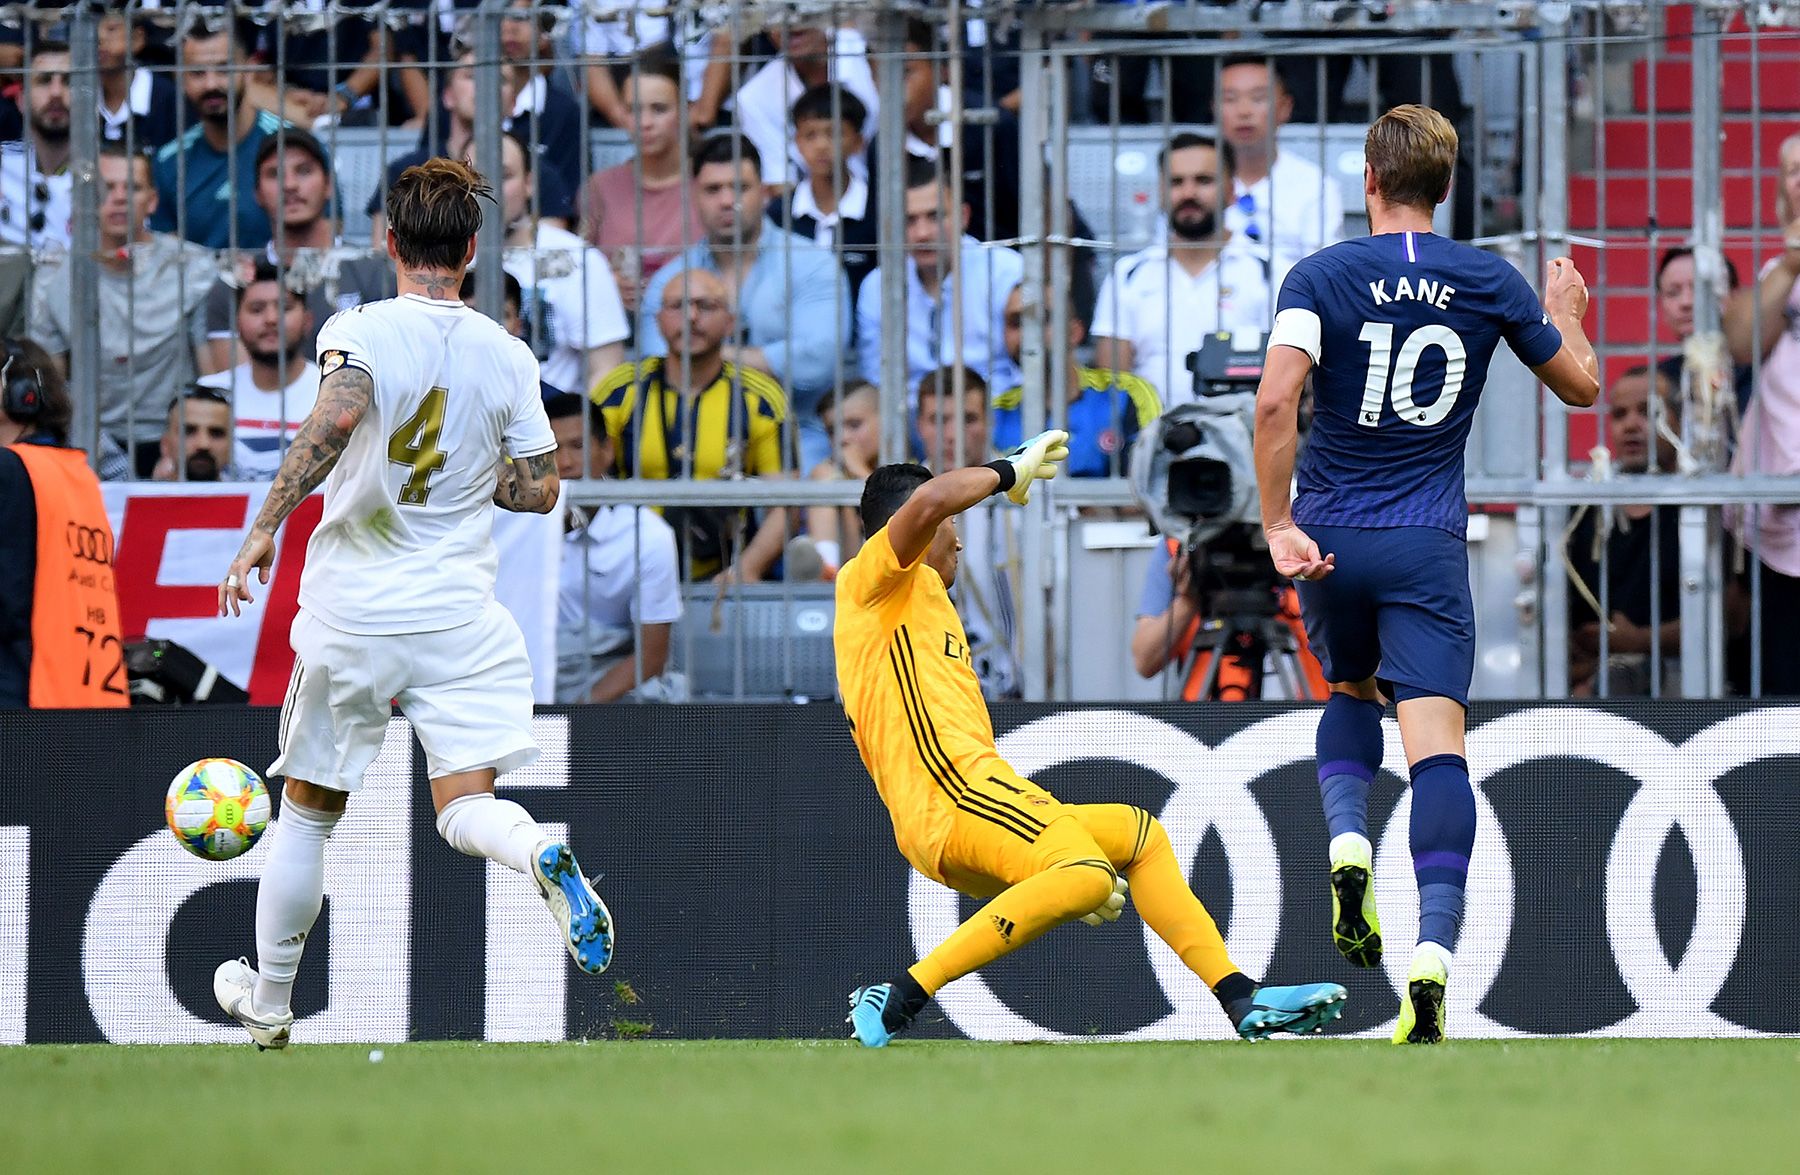 Harry Kane scoring the victory goal against Madrid